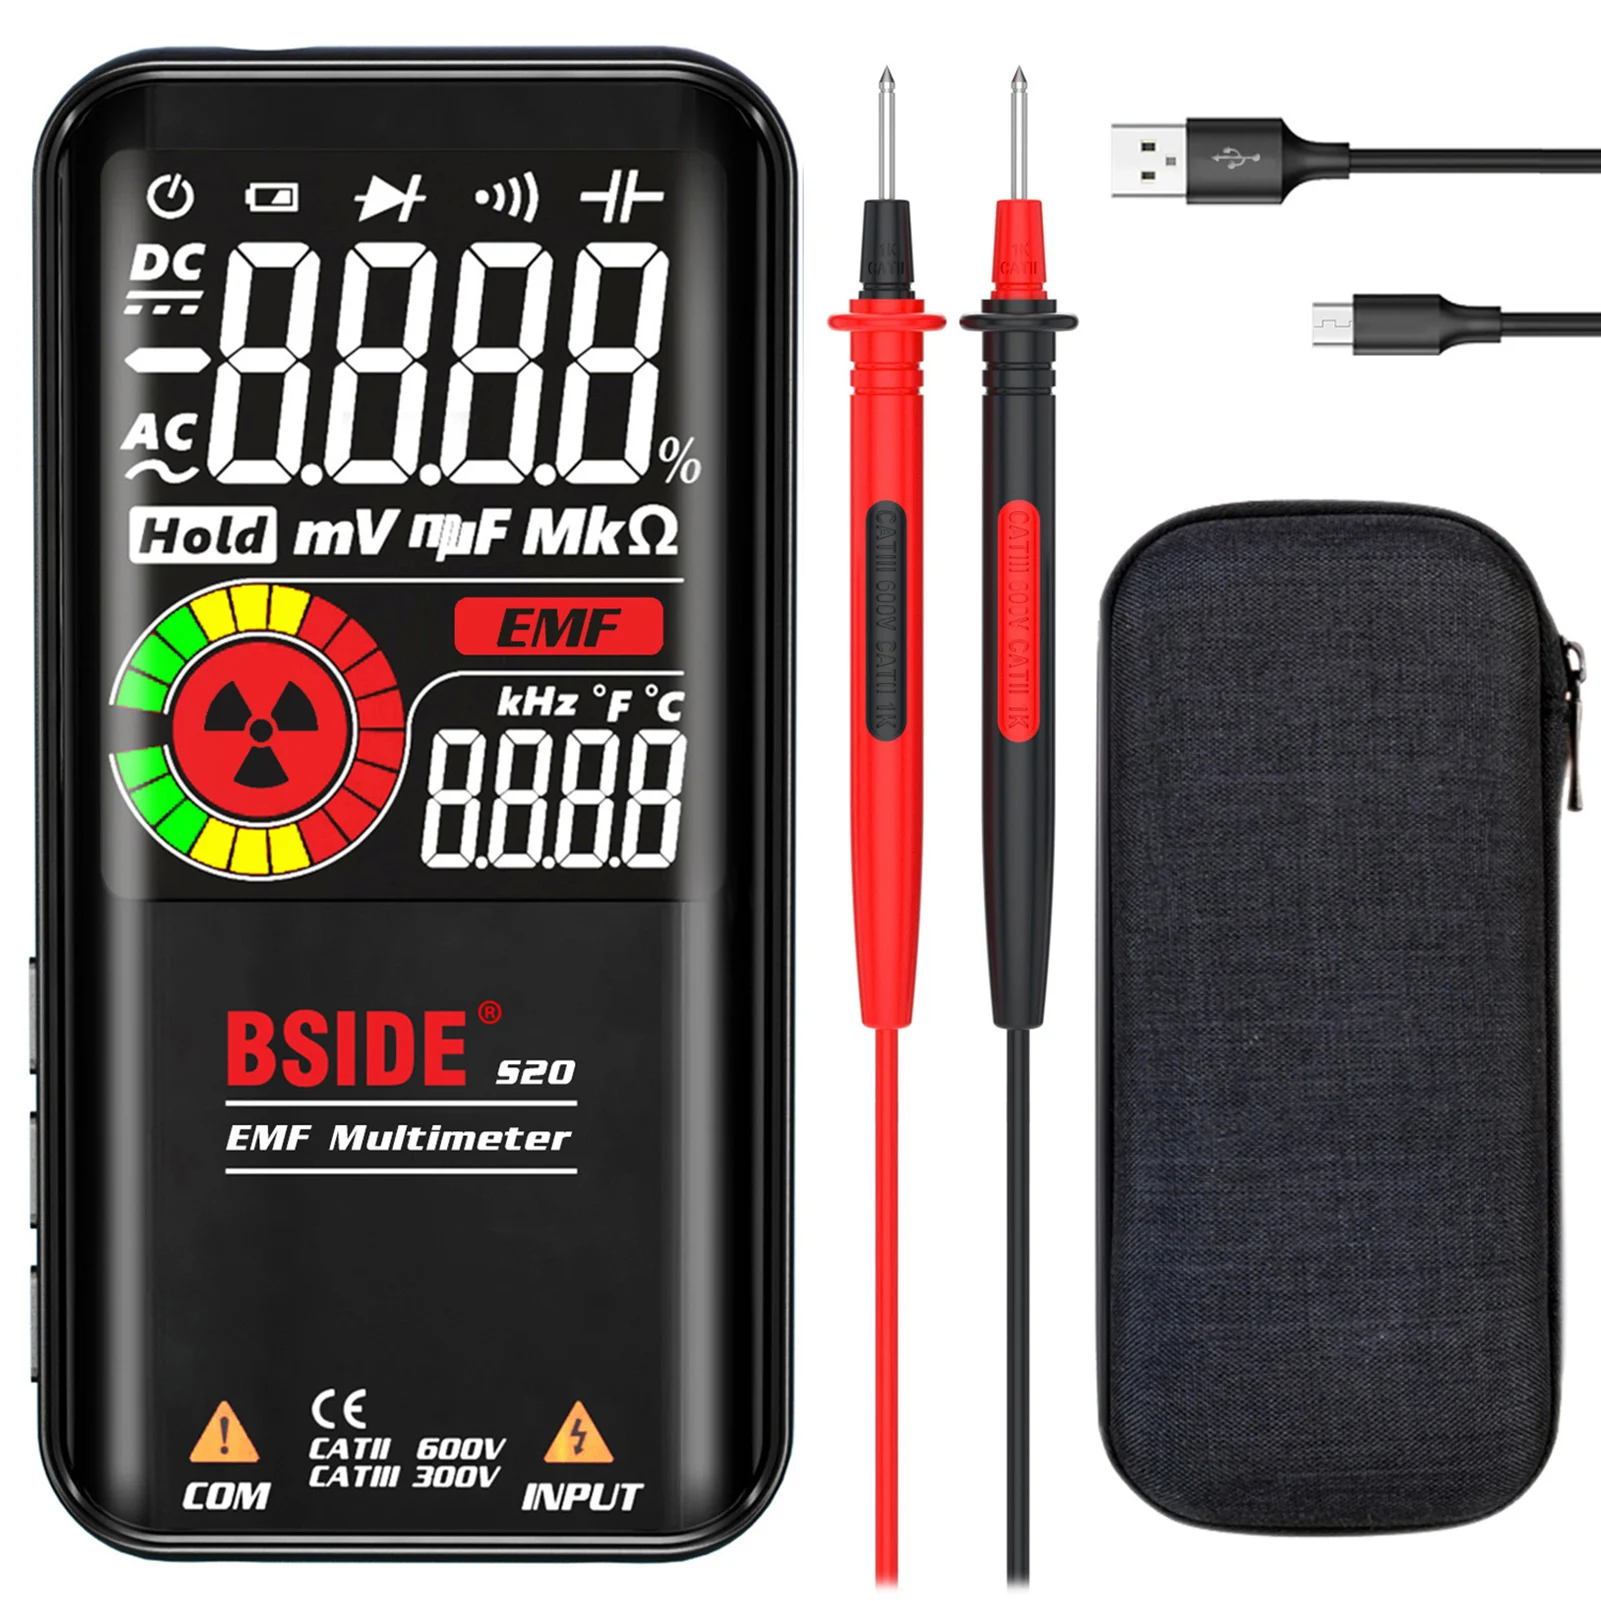 

BSIDE S20 Intelligent EMF Multimeter Electromagnetic Radiation Detector 9999 Counts Auto Range Universal Meter Radiation Monitor